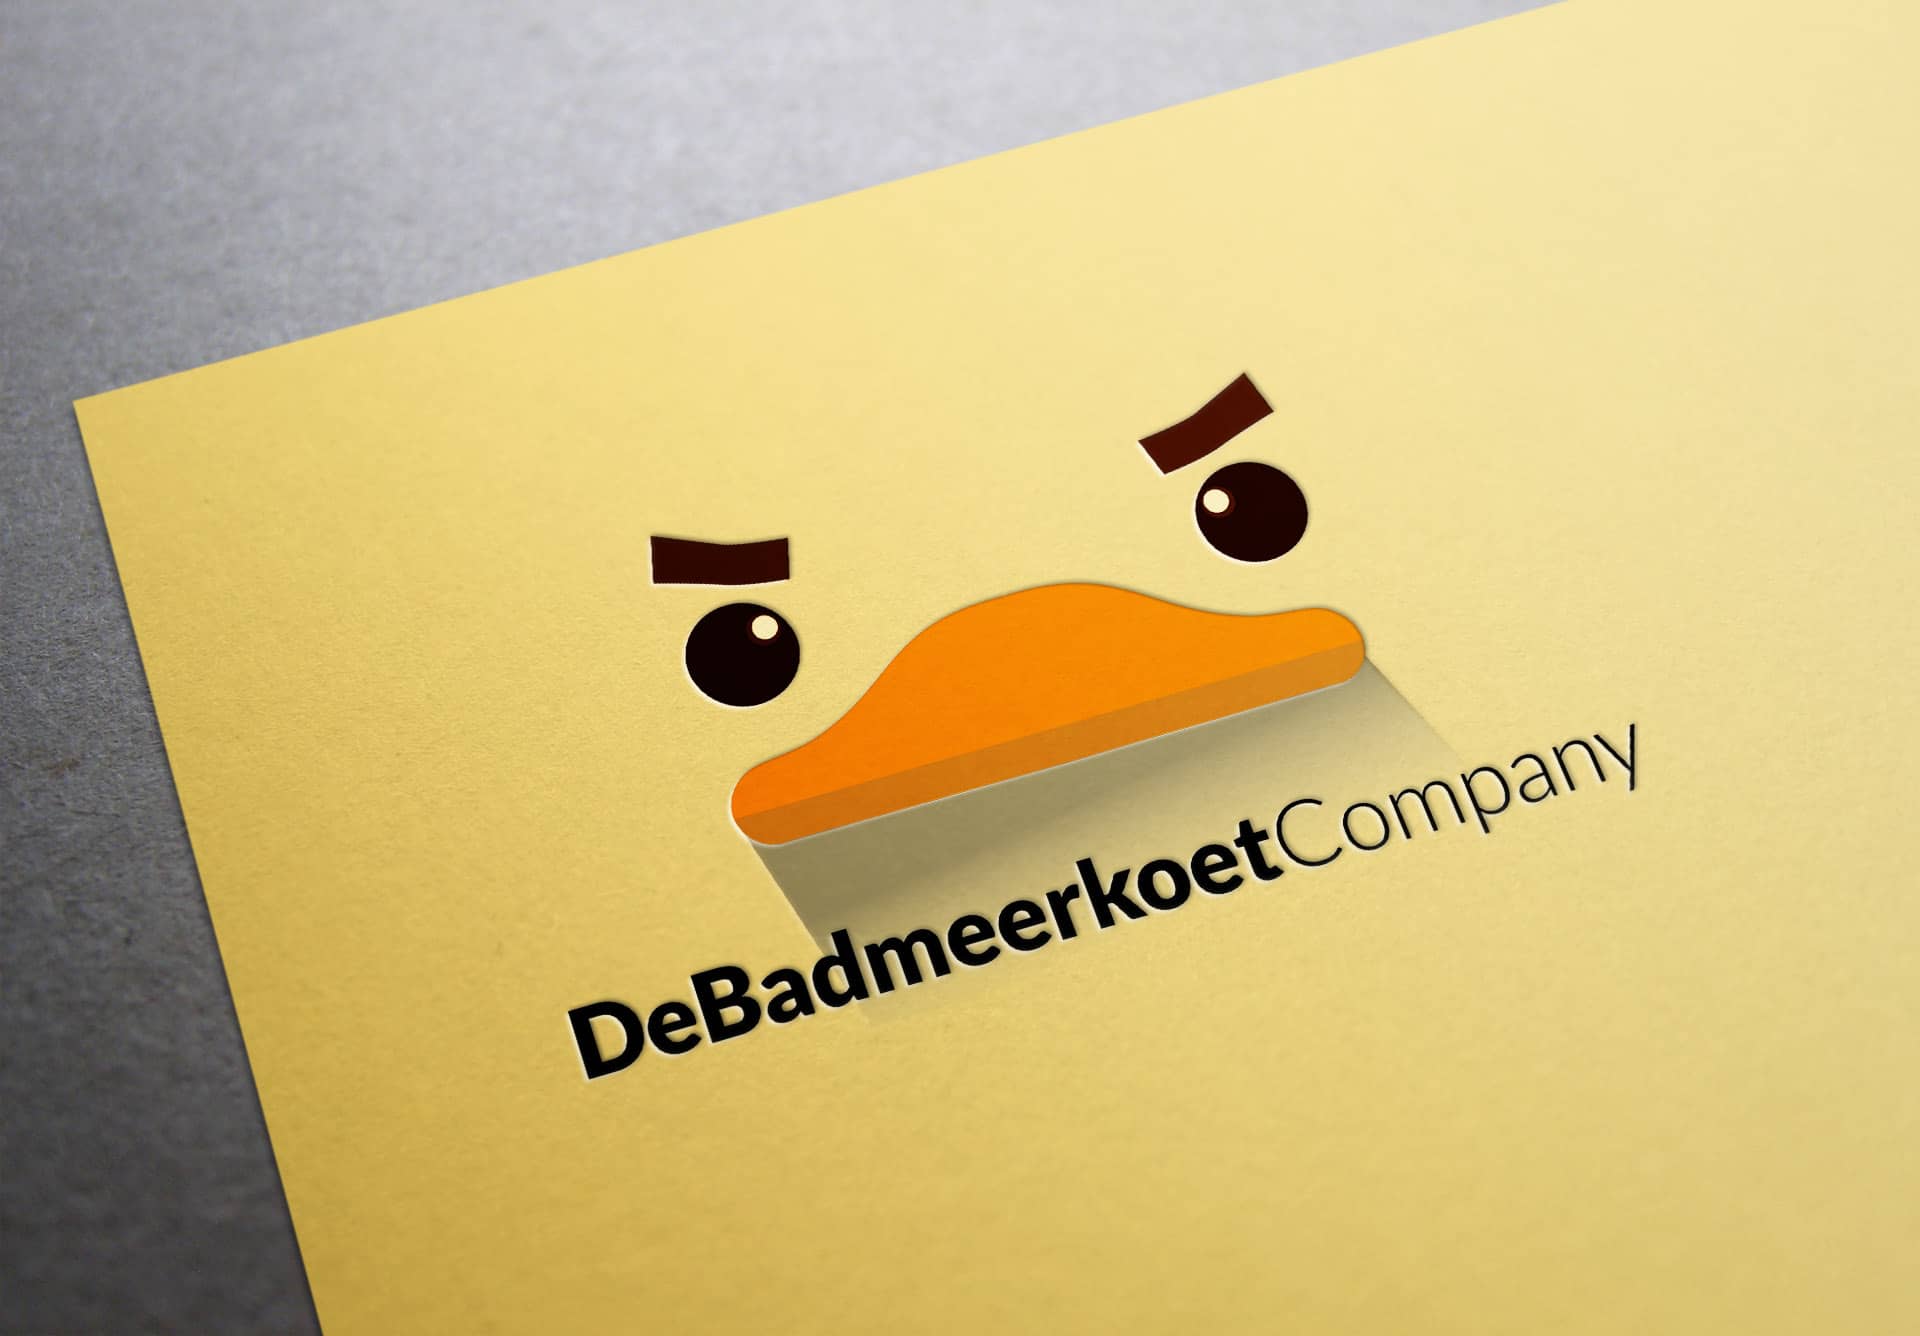 Logo DeBadmeerkoetCompany